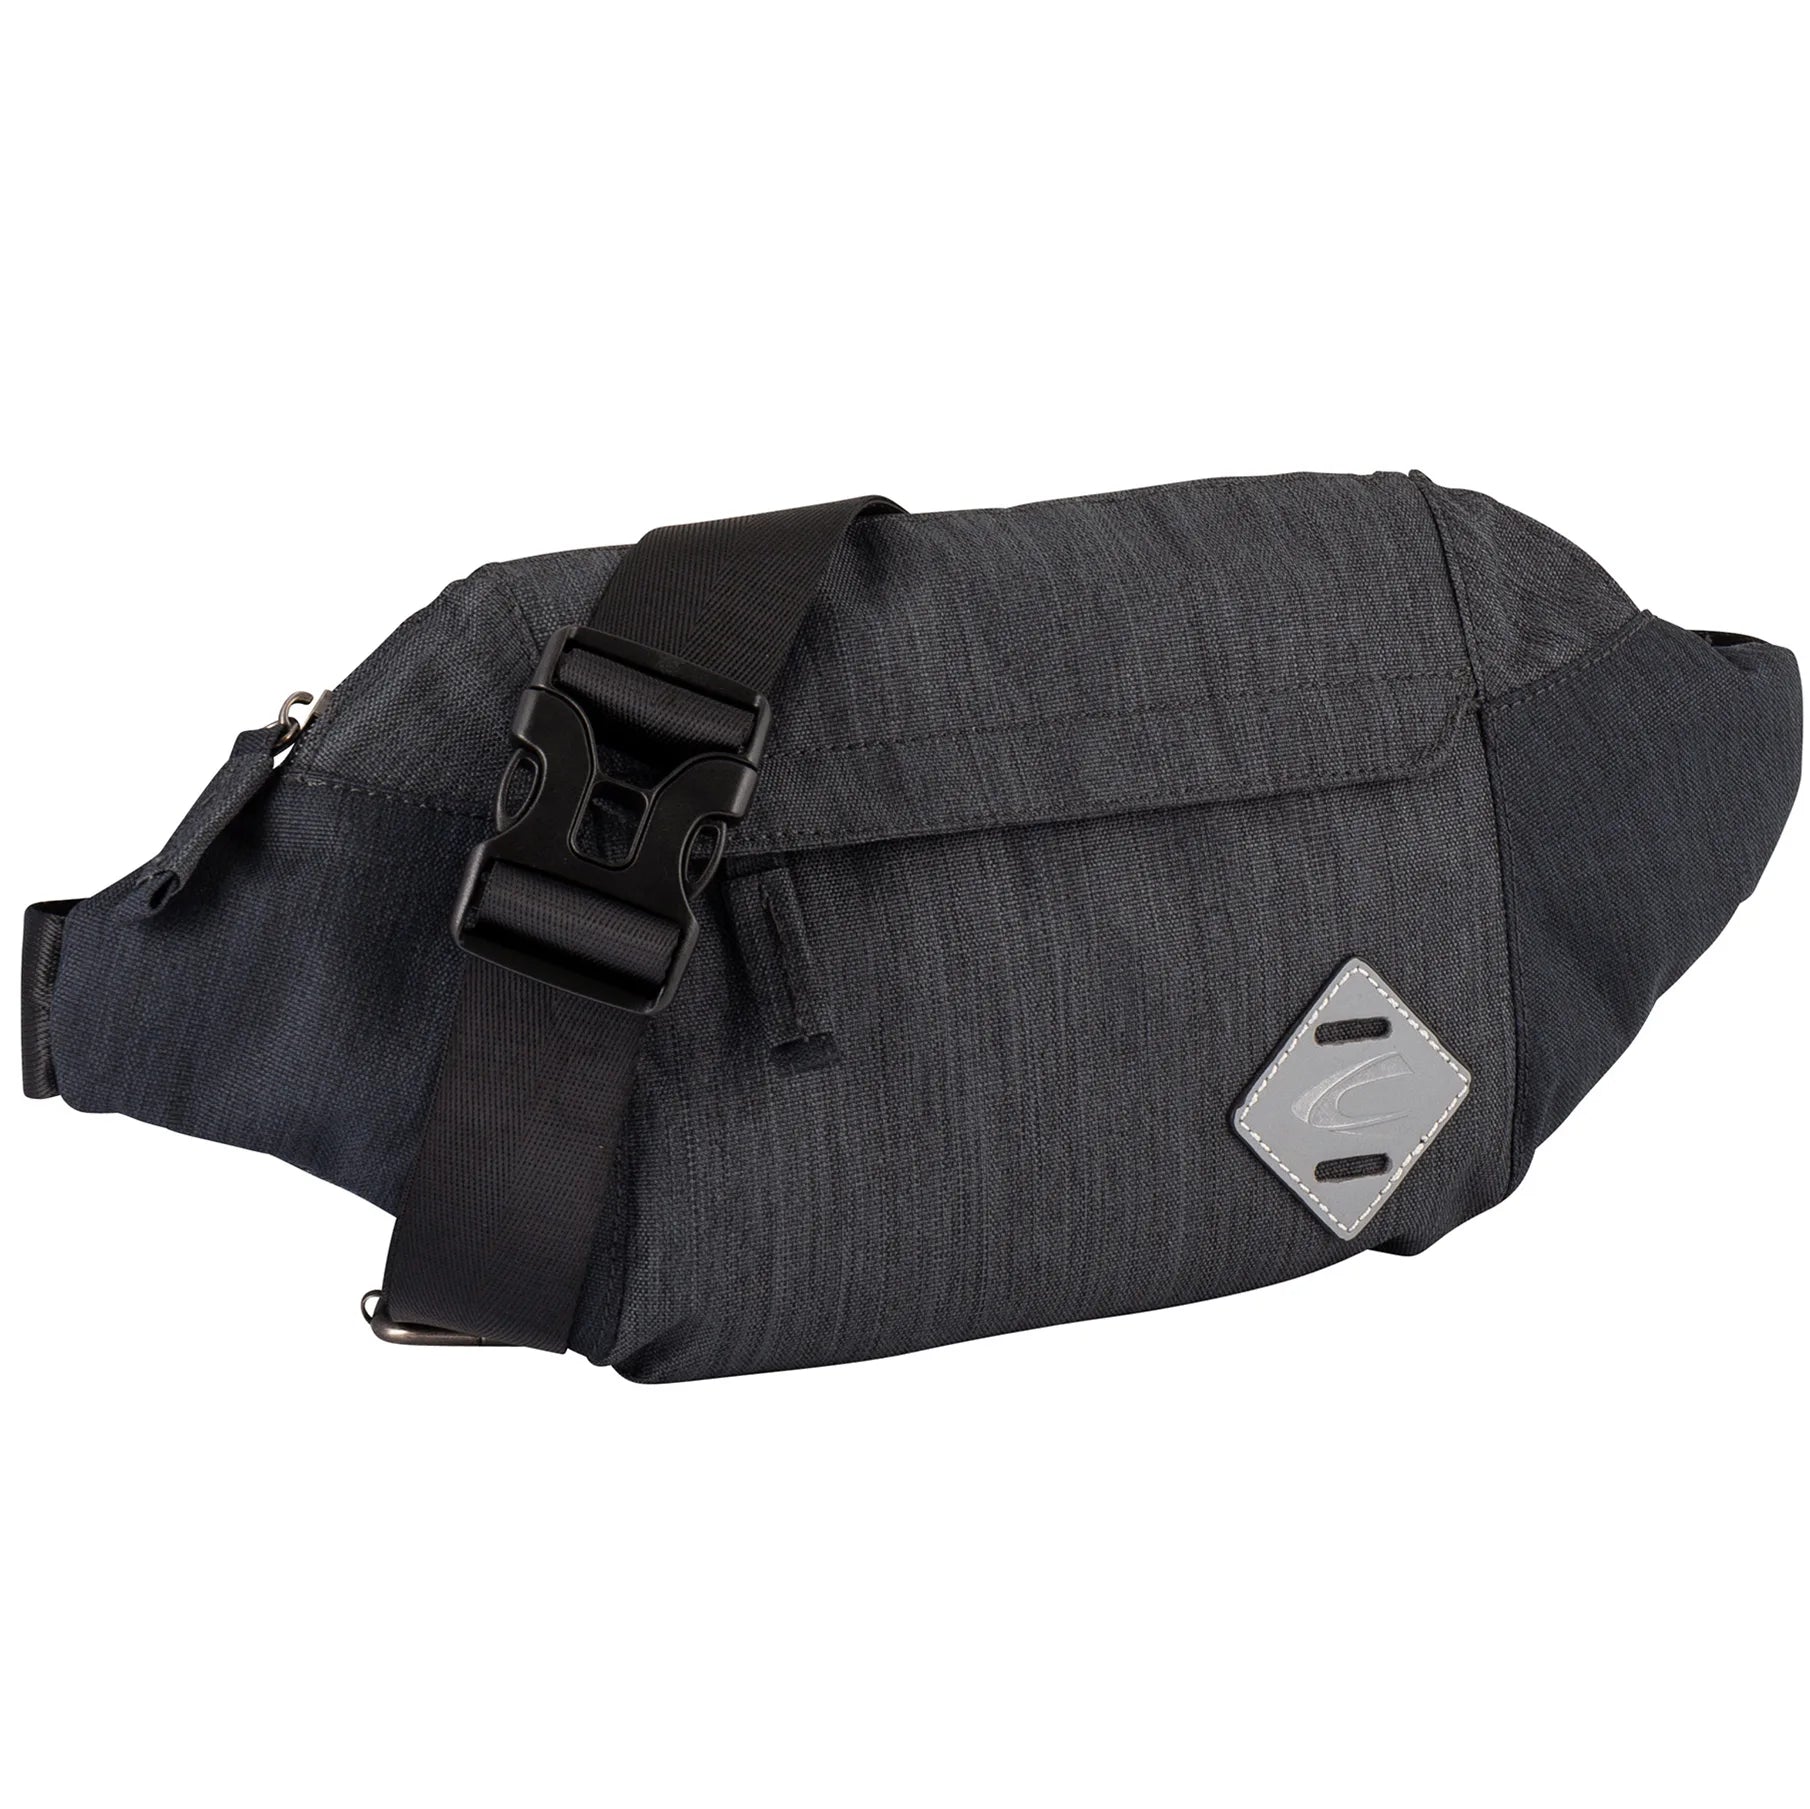 Camel Active Satipo belt bag 20 cm - dark gray